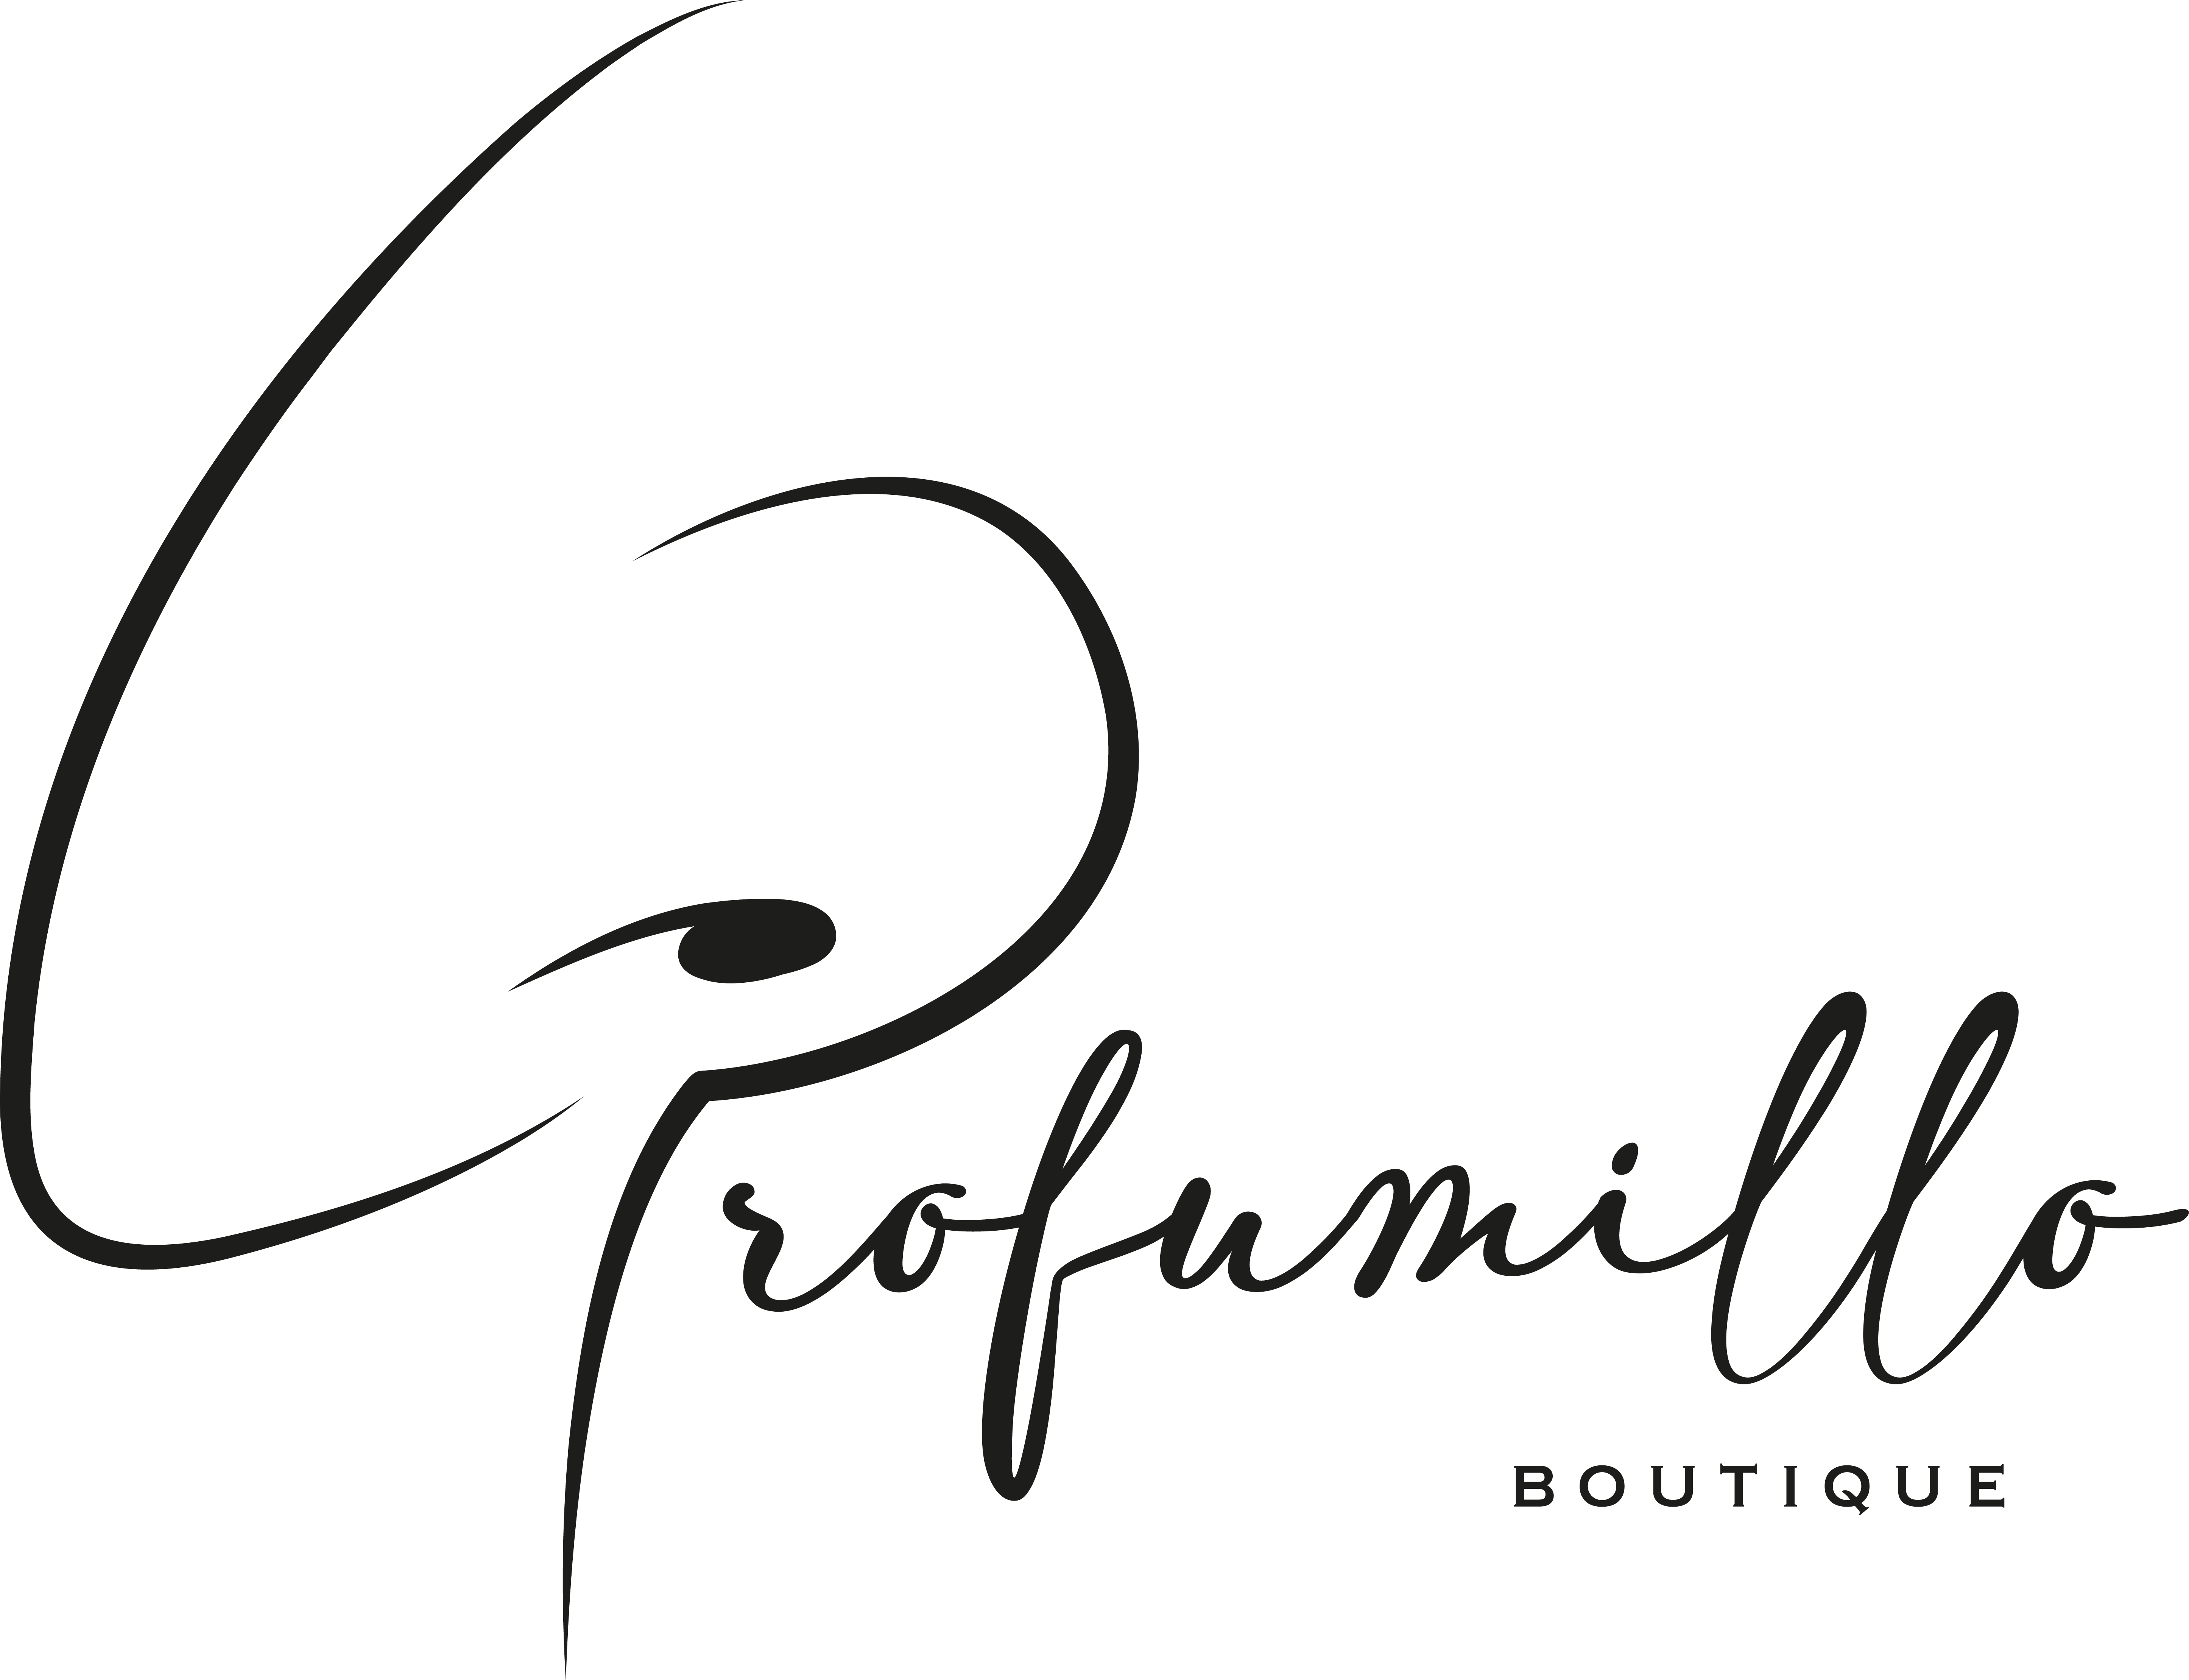 profumillo boutique logo